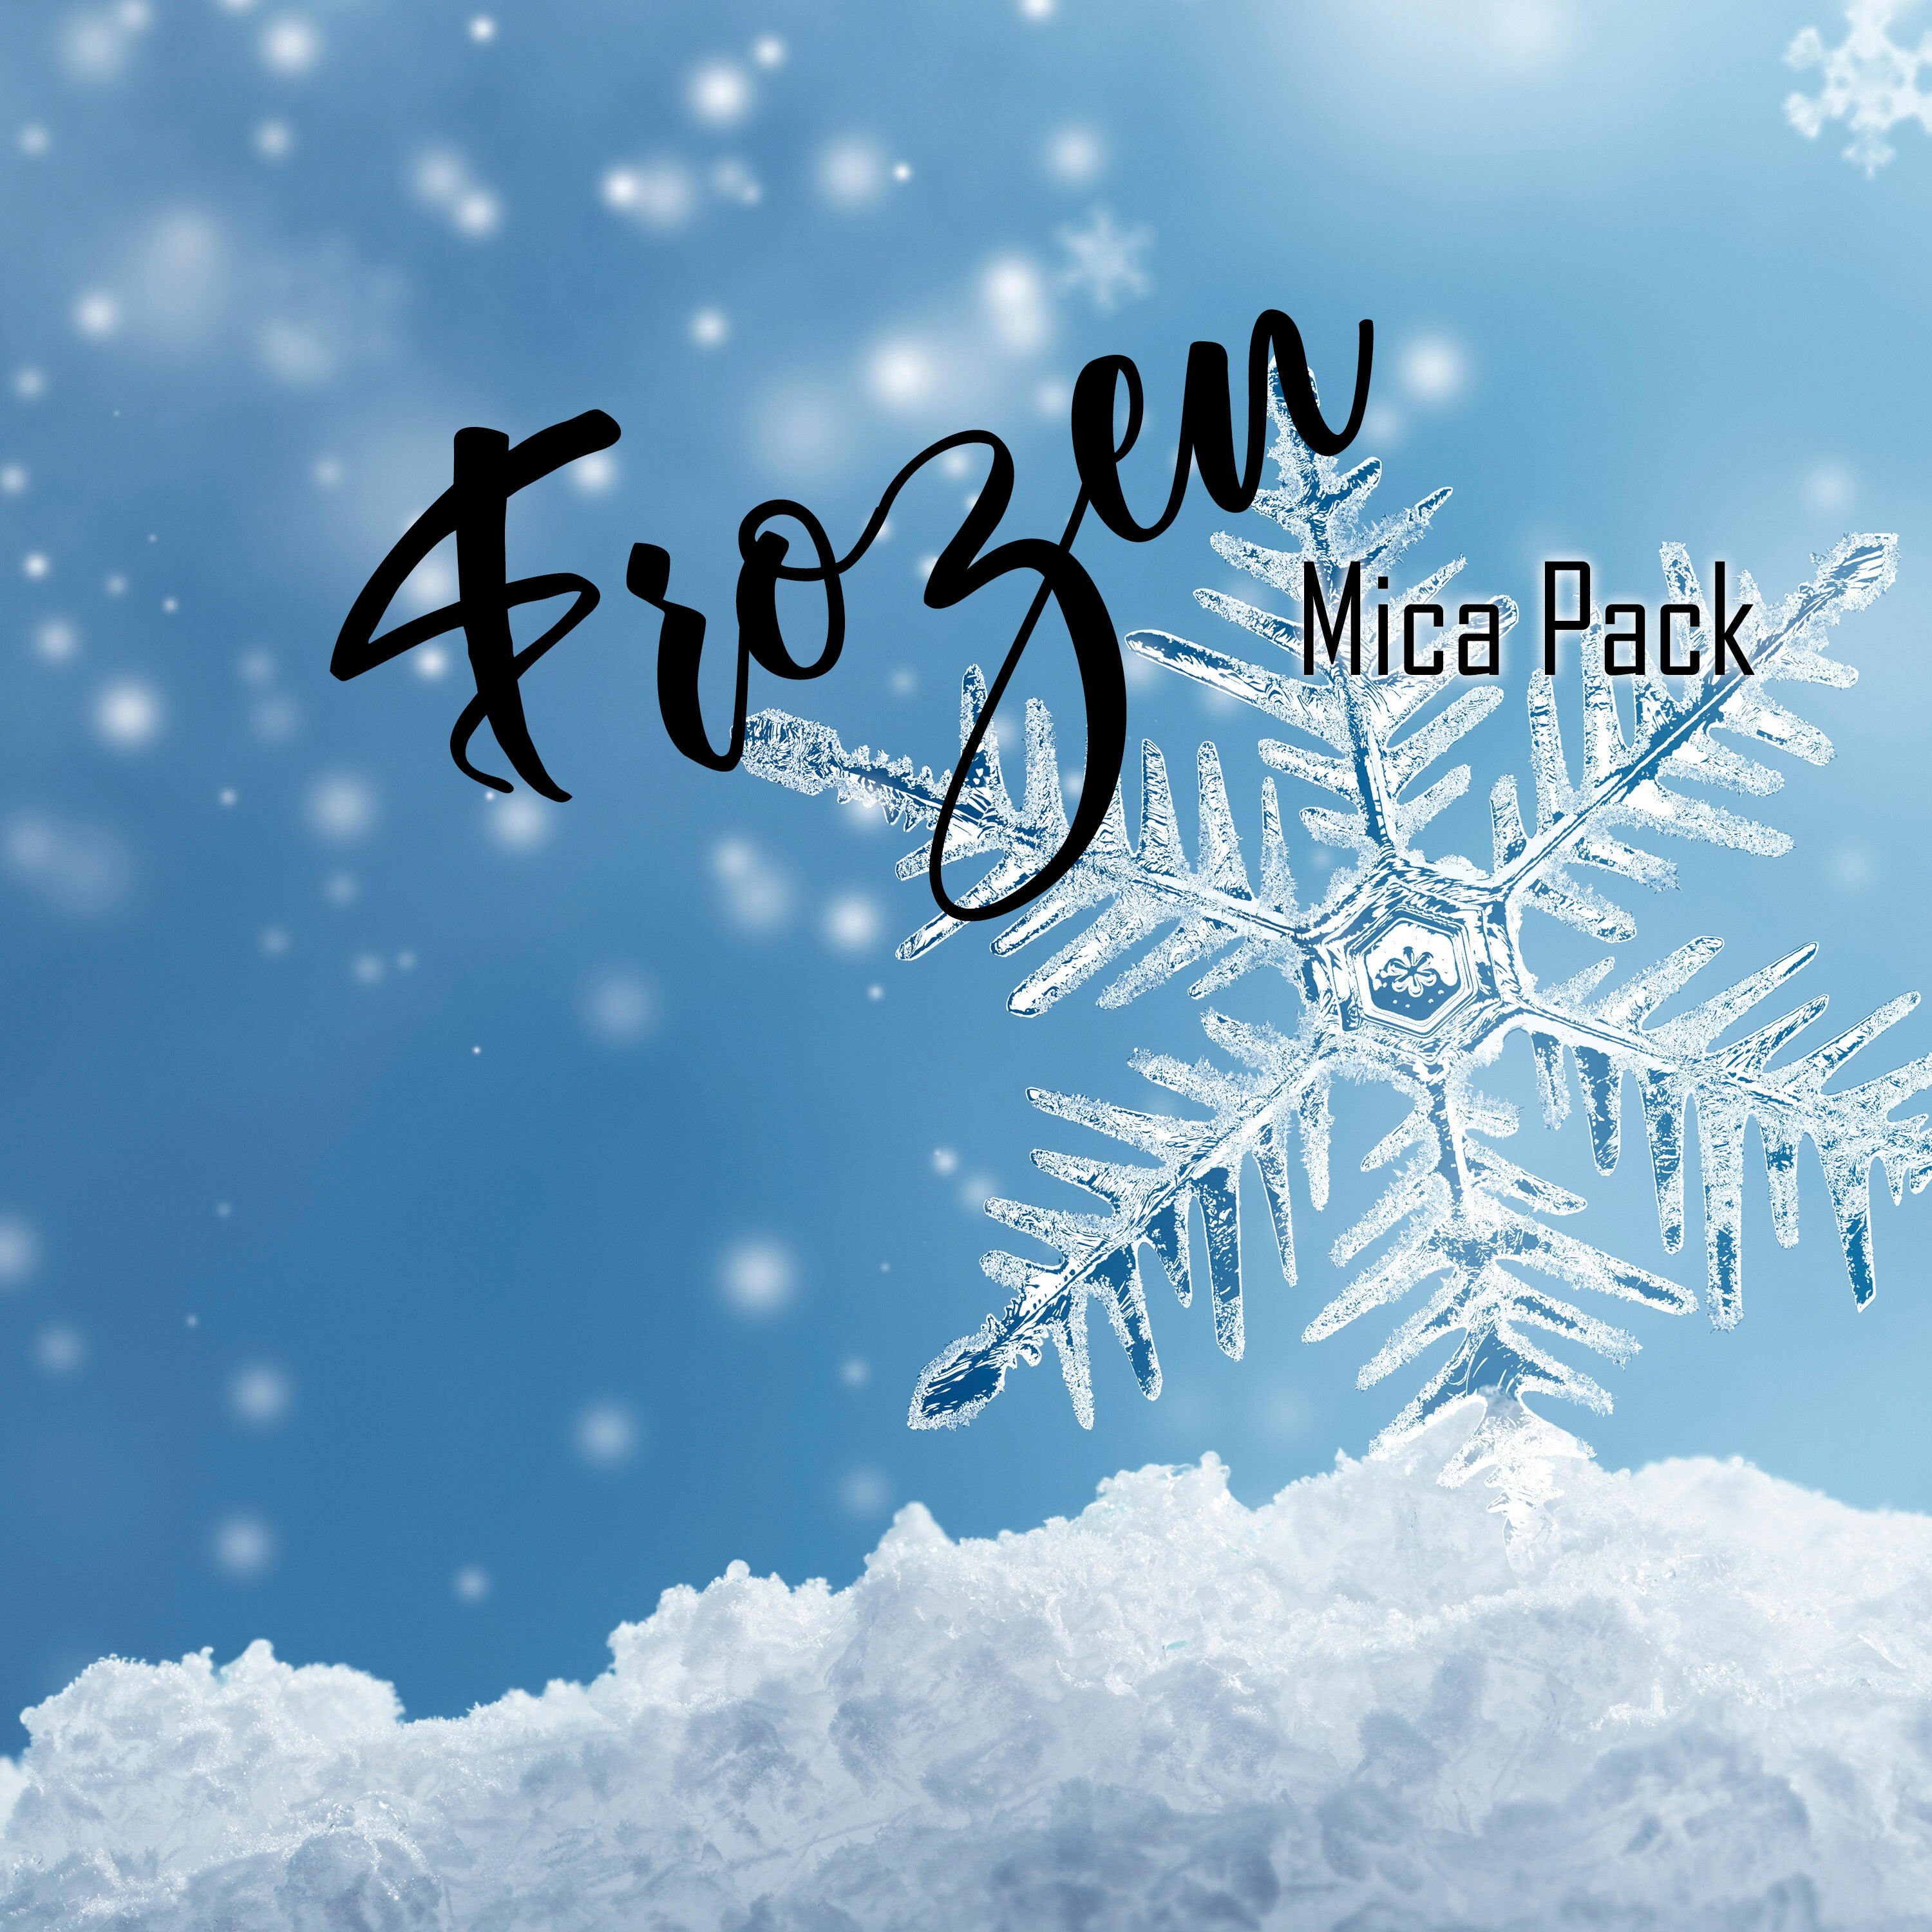 Frozen Mica Powder Combo Pack